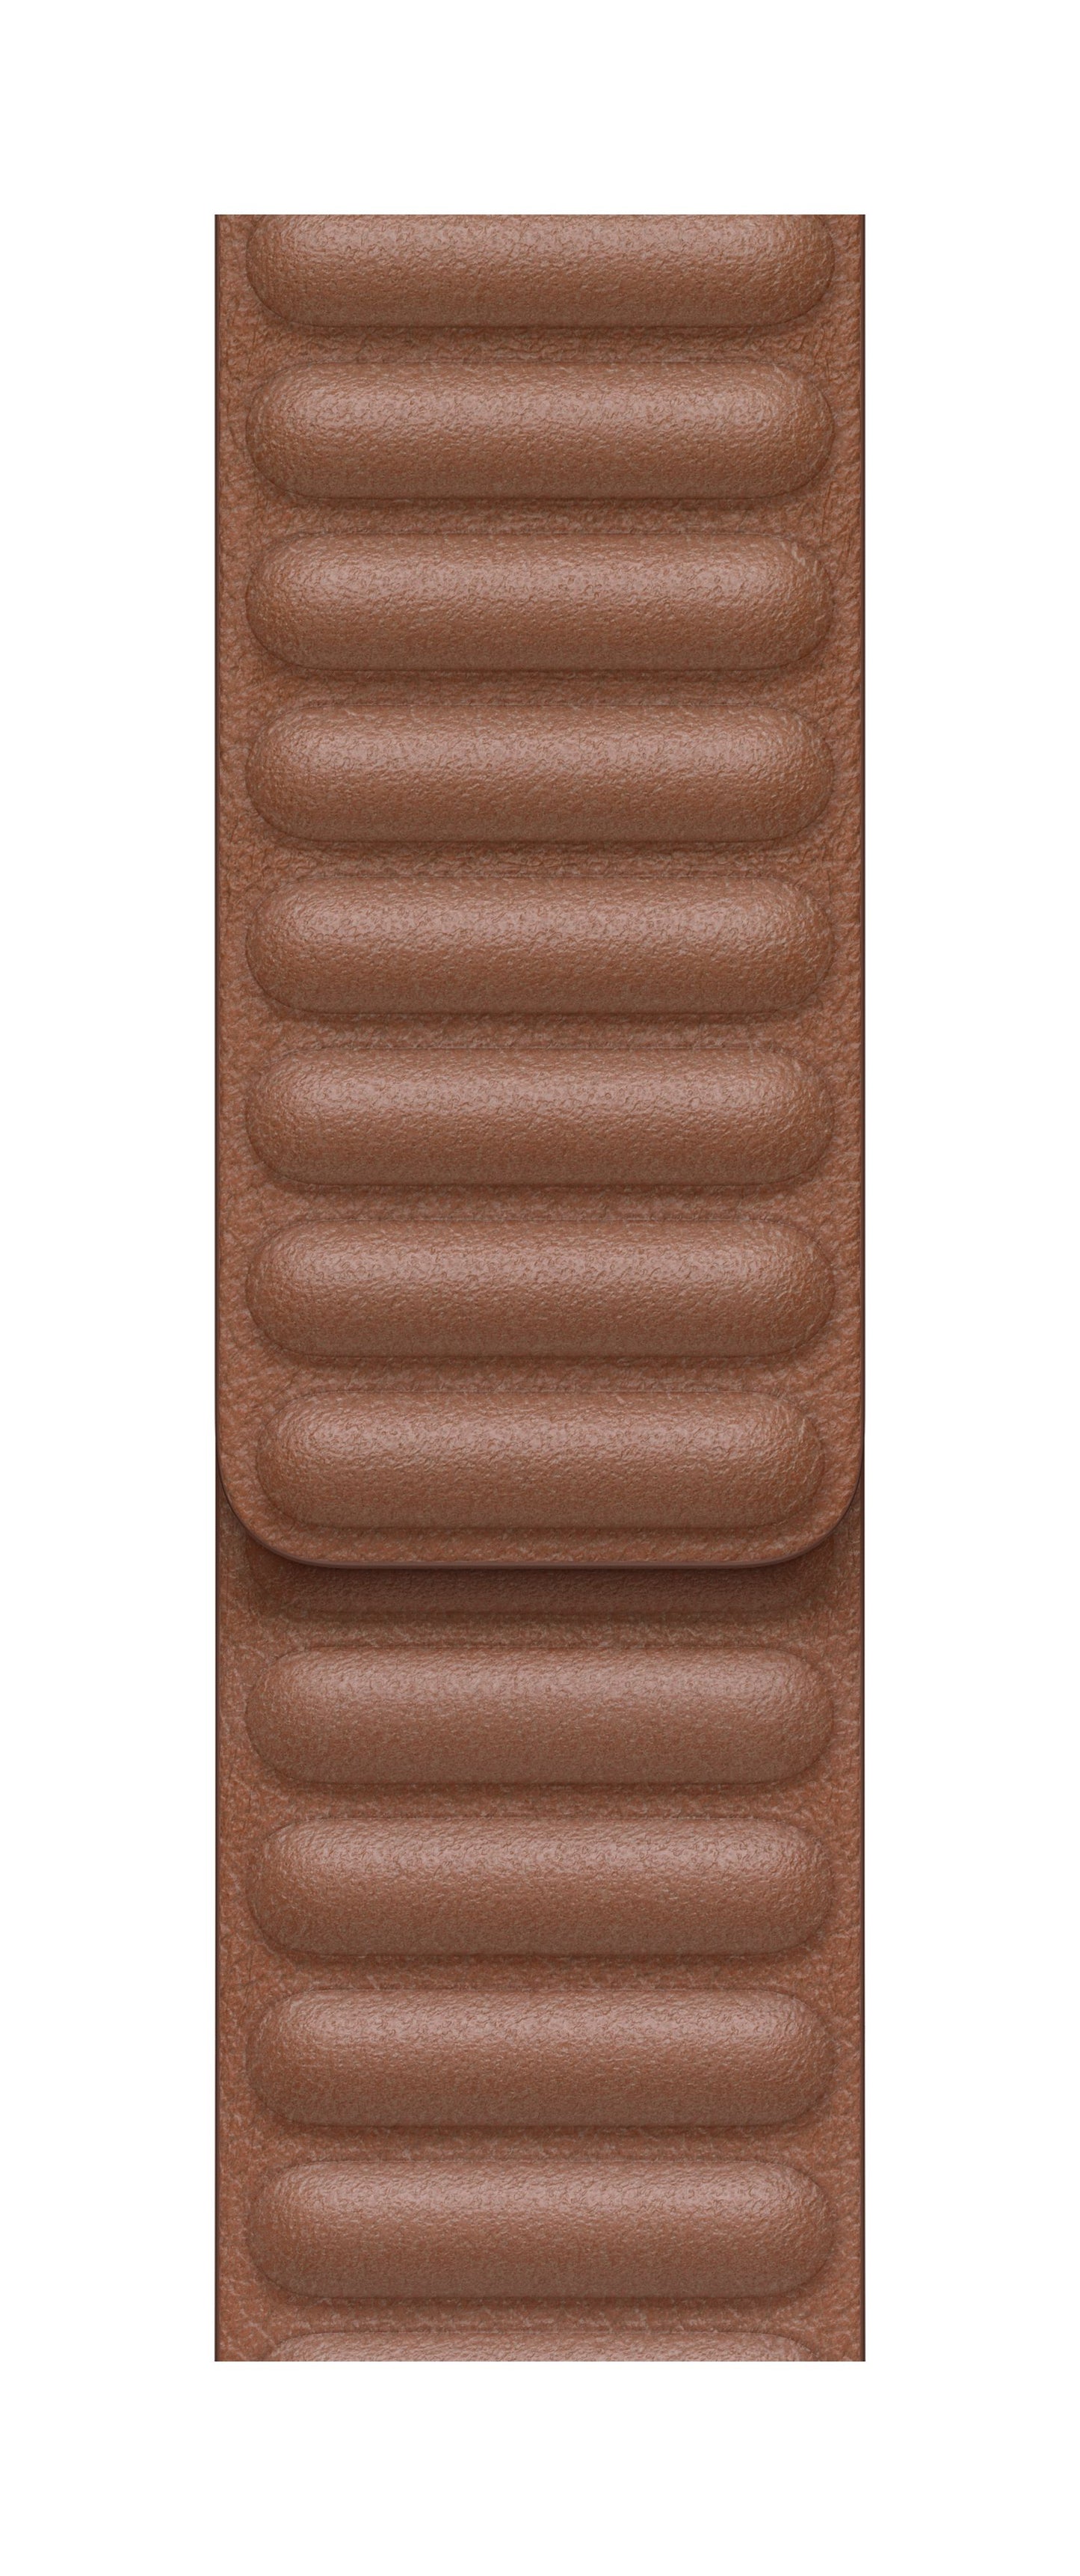 40mm Saddle Brown Leather Link - Large